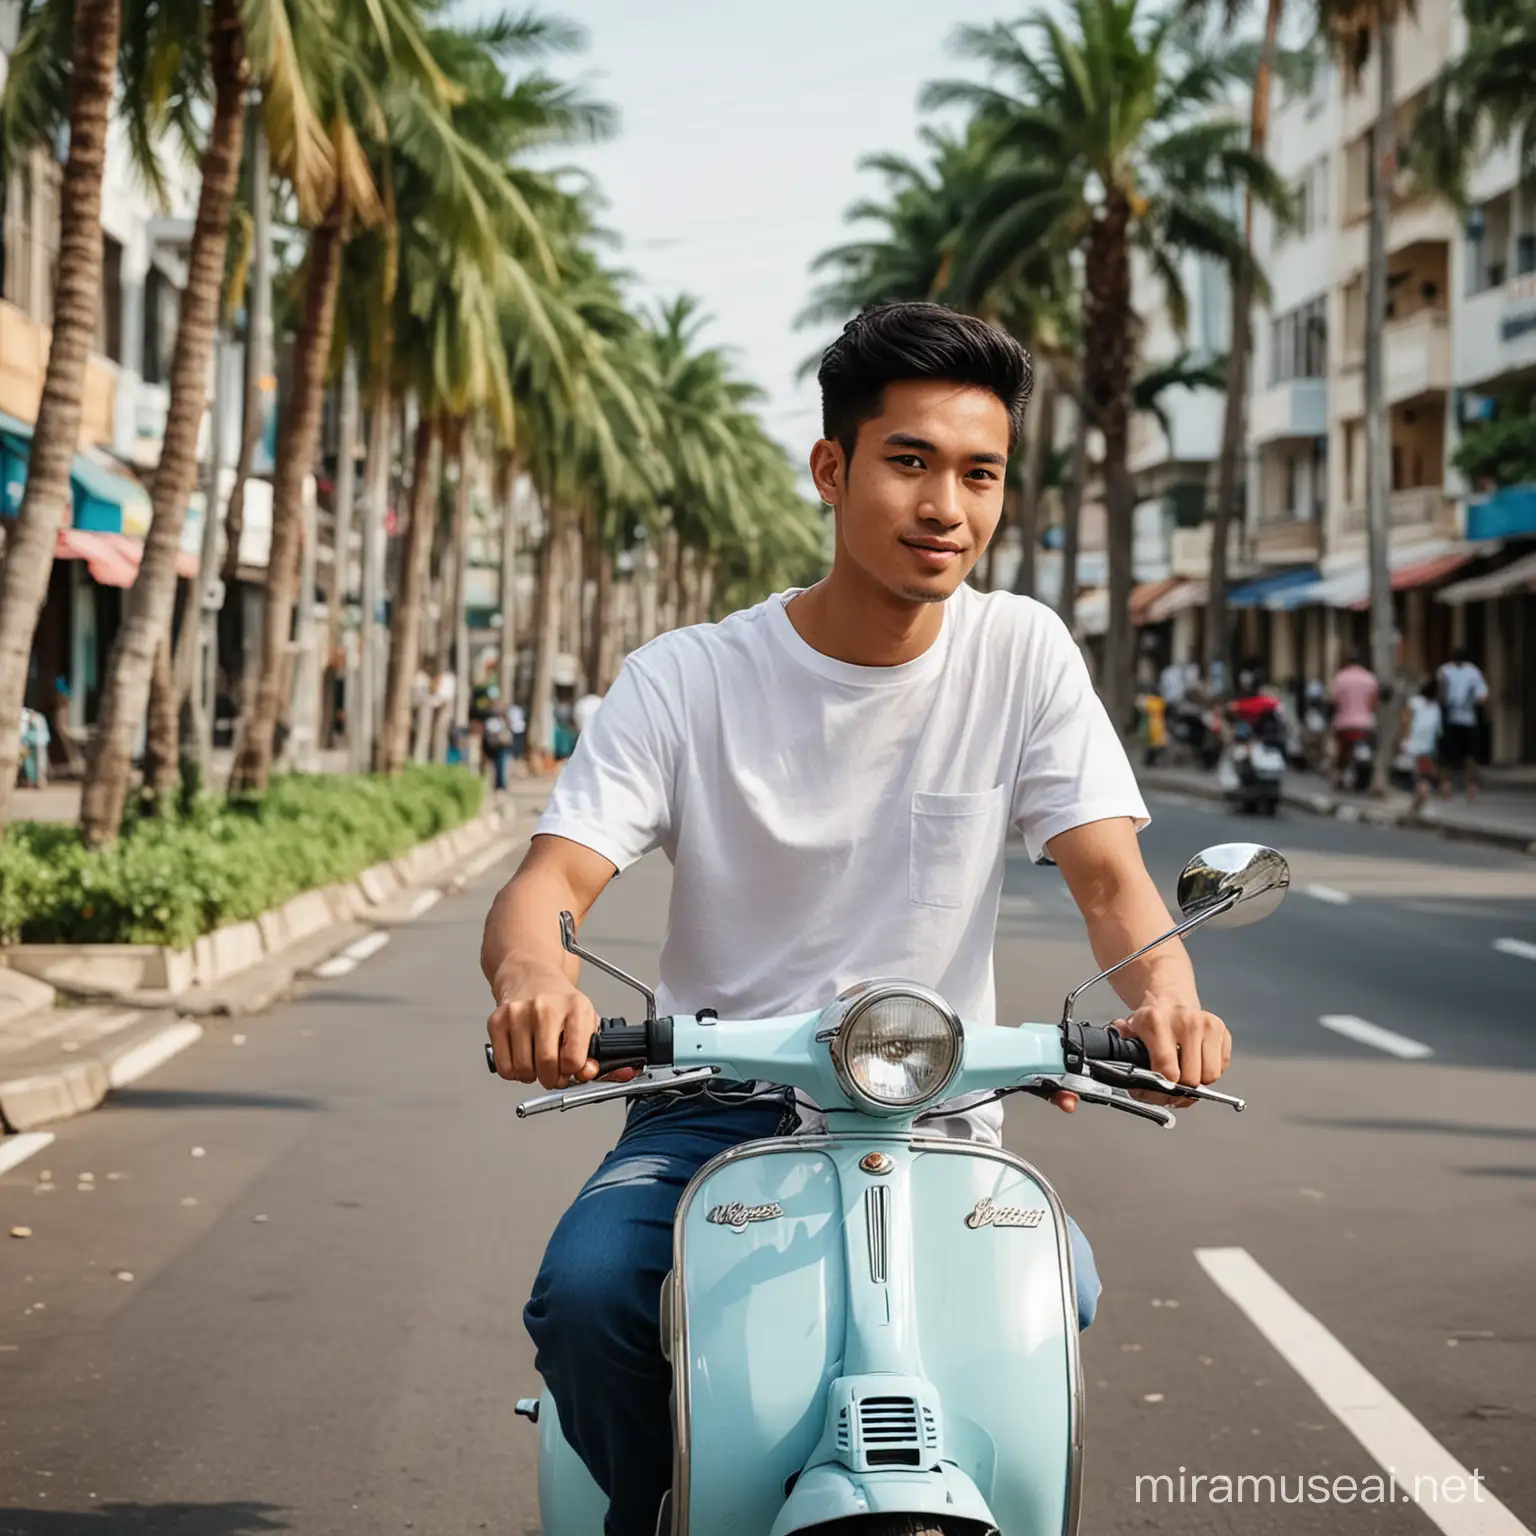 Youthful Indonesian Rider on Classic White Vespa Urban Palm Tree Boulevard